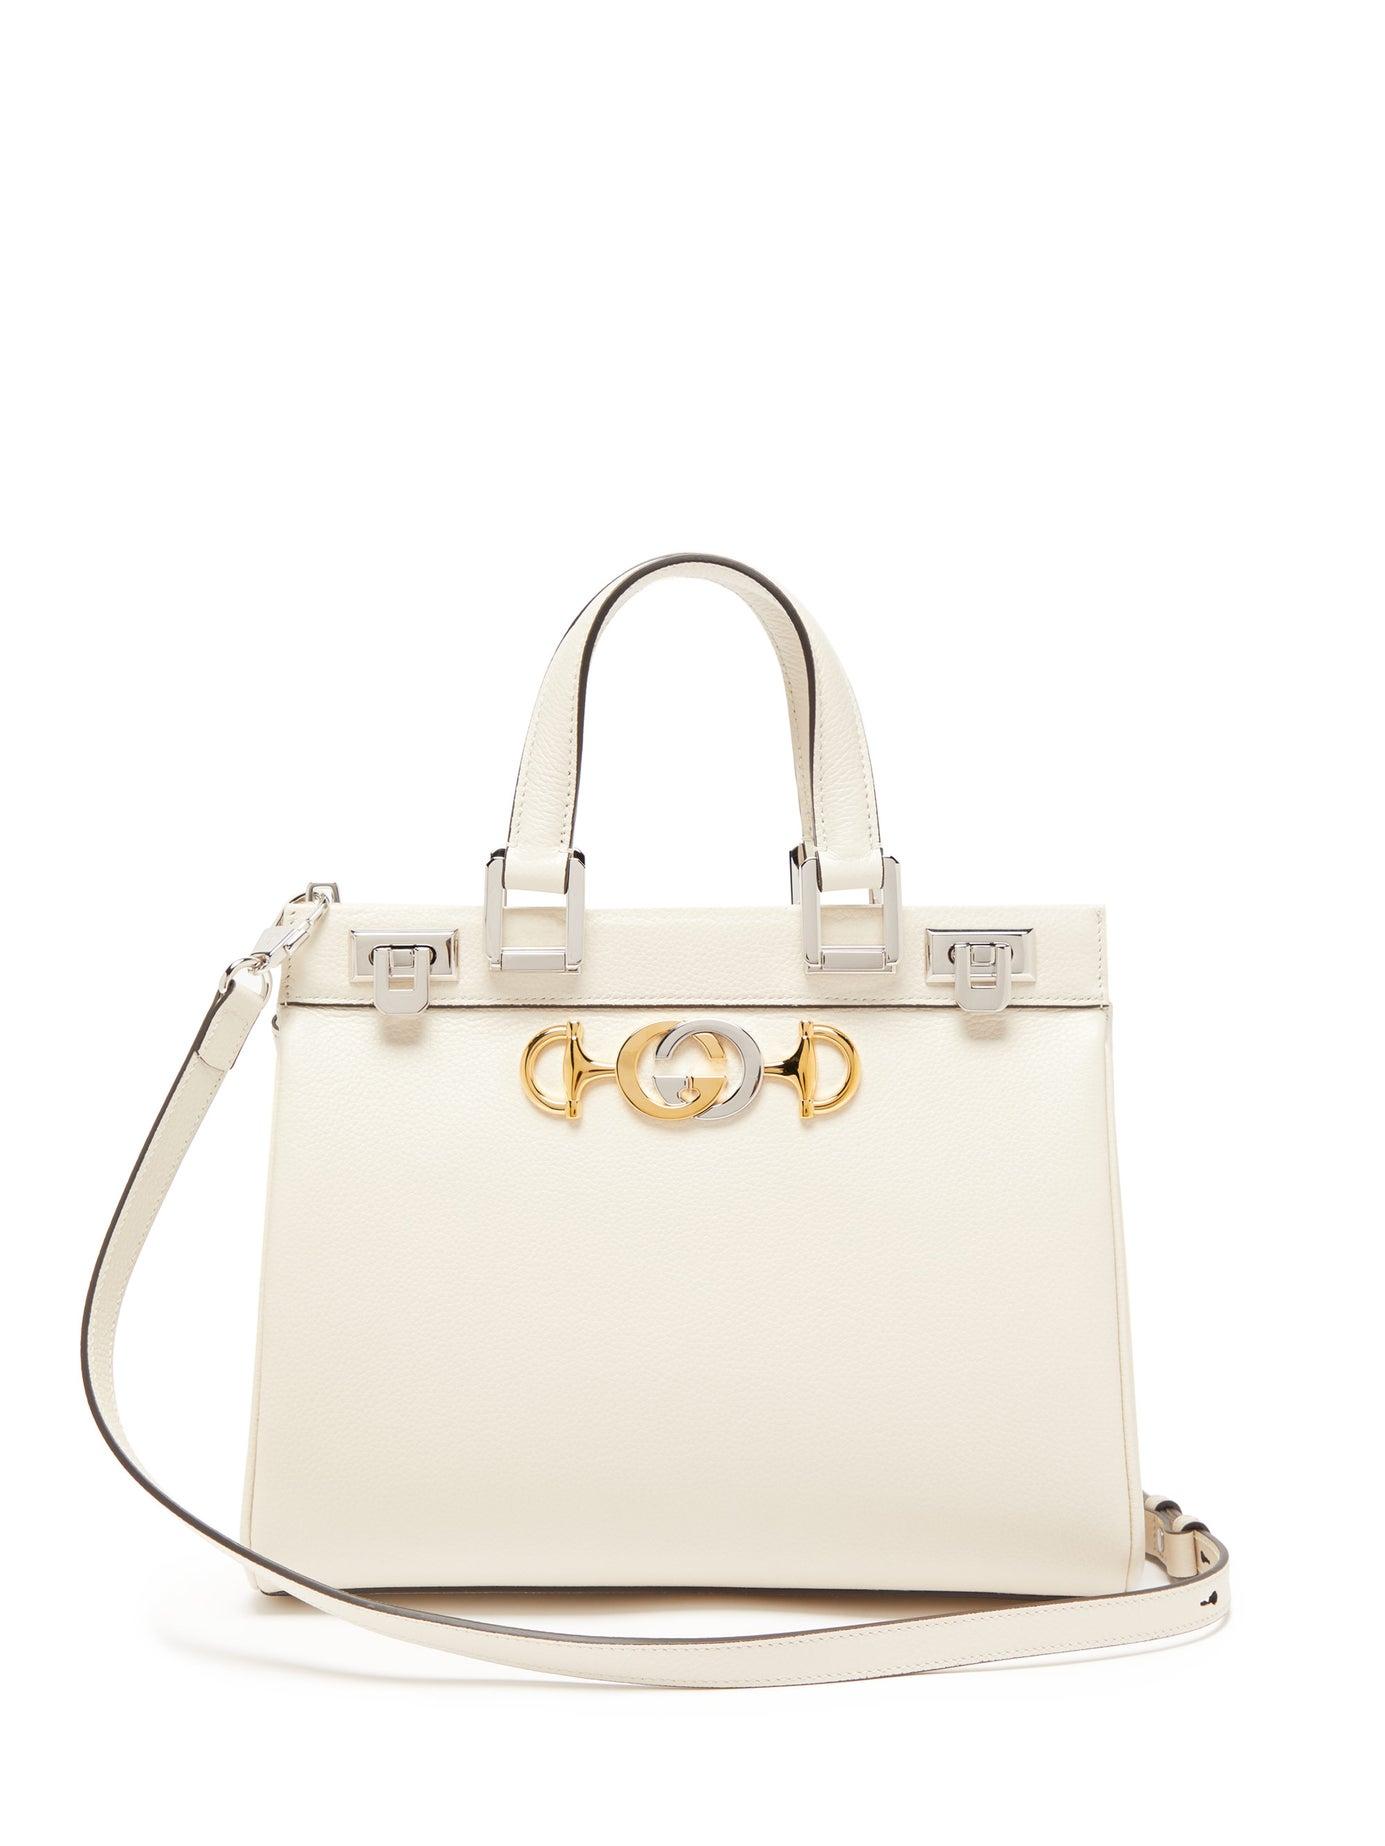 Gucci Zumi Small Top Handle Leather Handbag in White - Lyst